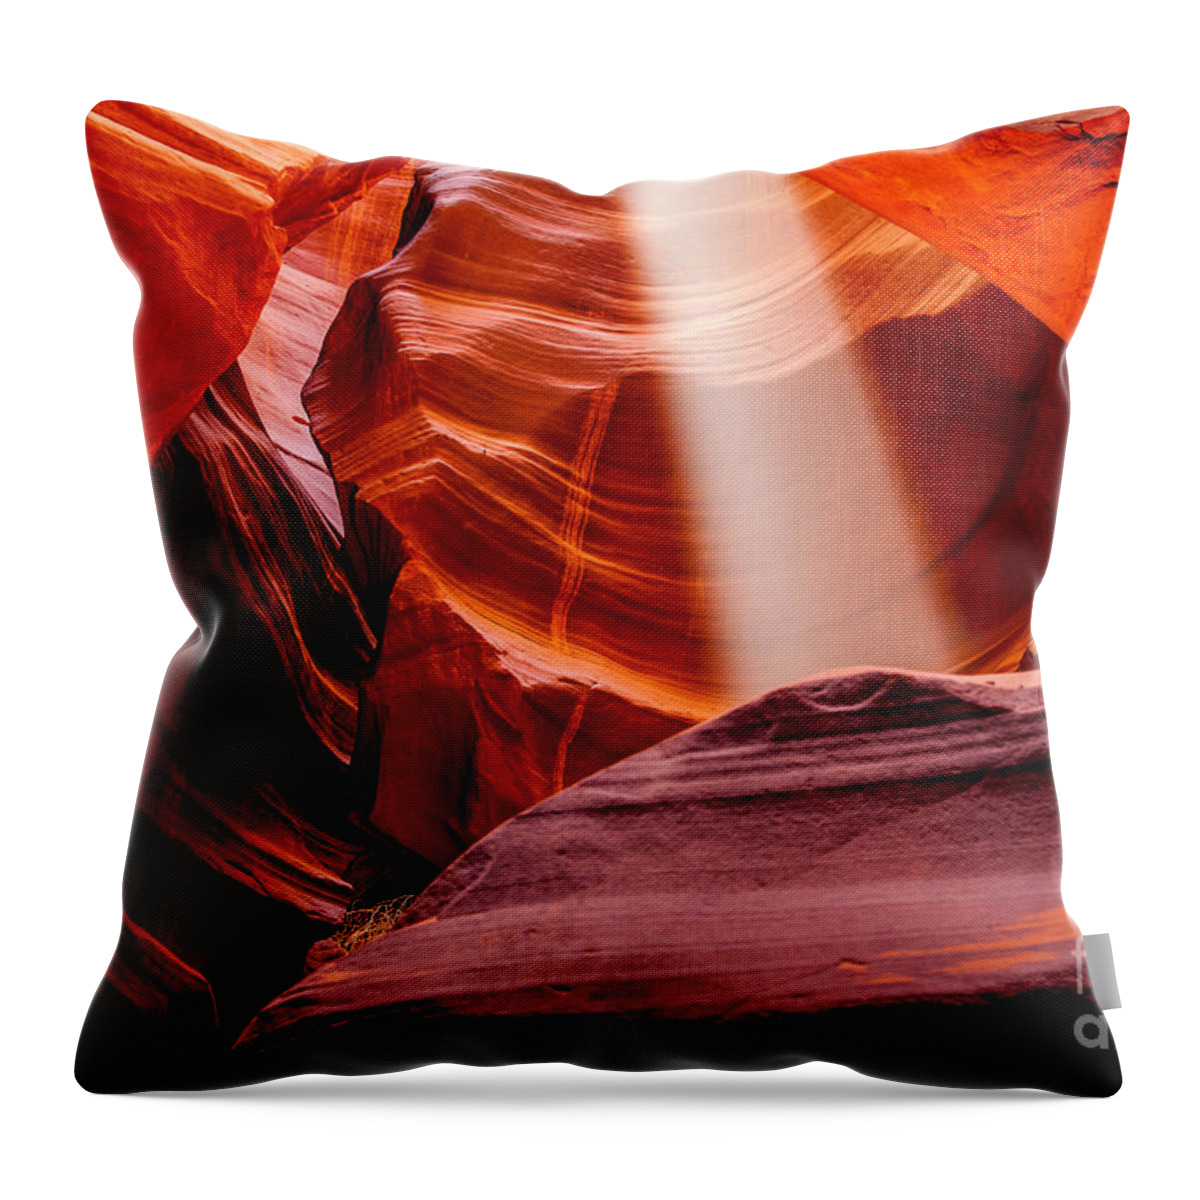 Antelope Canyon Throw Pillow featuring the photograph Antelope Canyon Beam by Az Jackson